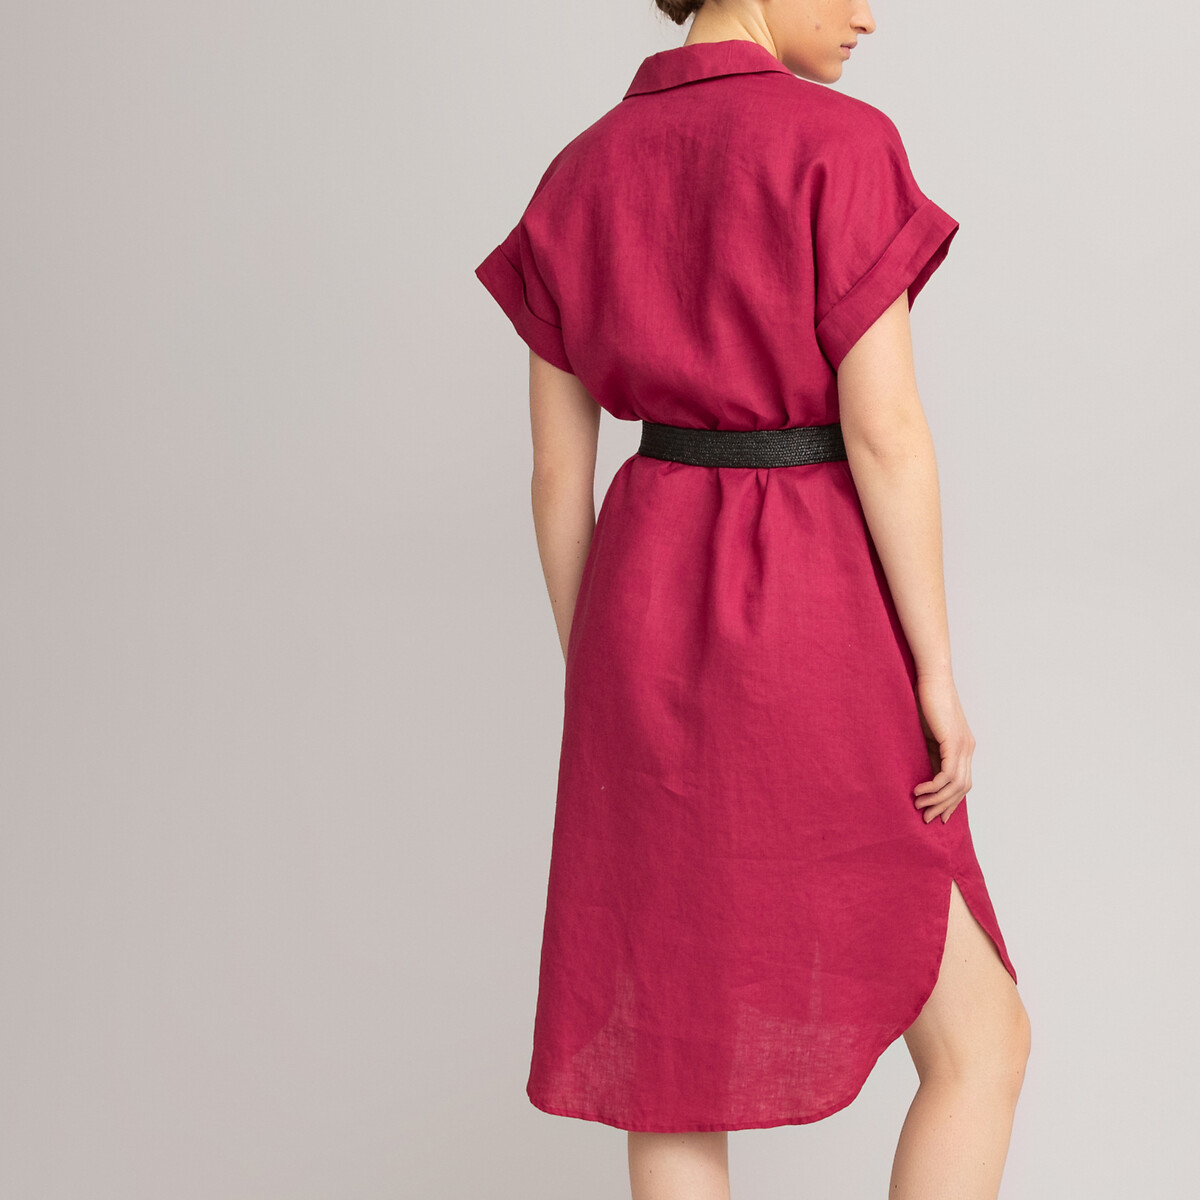 Платье-рубашка LaRedoute С короткими рукавами из льна 38 (FR) - 44 (RUS) розовый, размер 38 (FR) - 44 (RUS) С короткими рукавами из льна 38 (FR) - 44 (RUS) розовый - фото 4